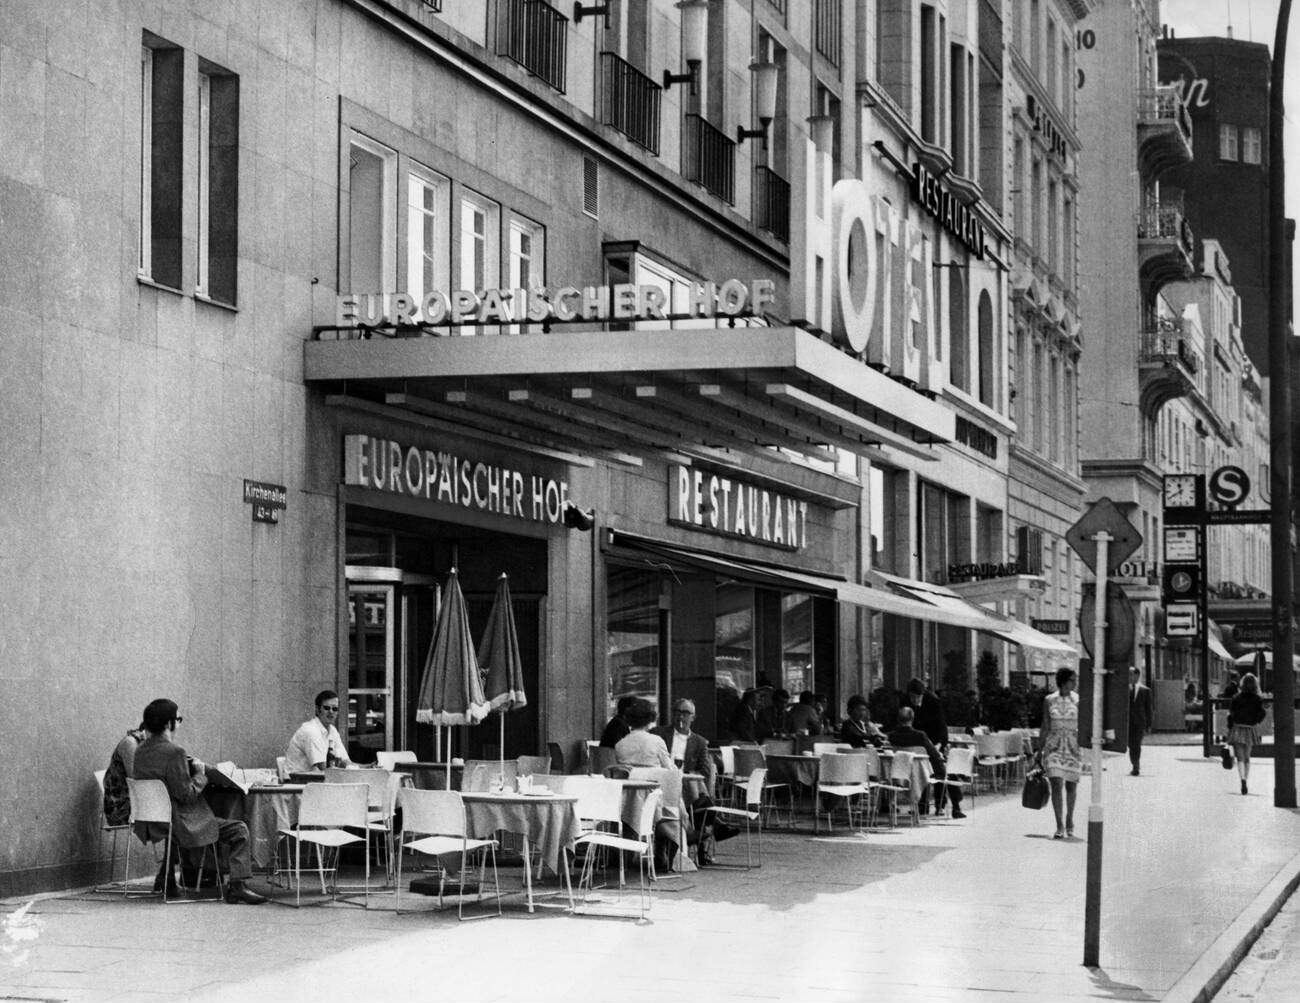 The Europaeischer Hof hotel and restaurant located in Kirchenallee, Hamburg, Germany in July 1970.